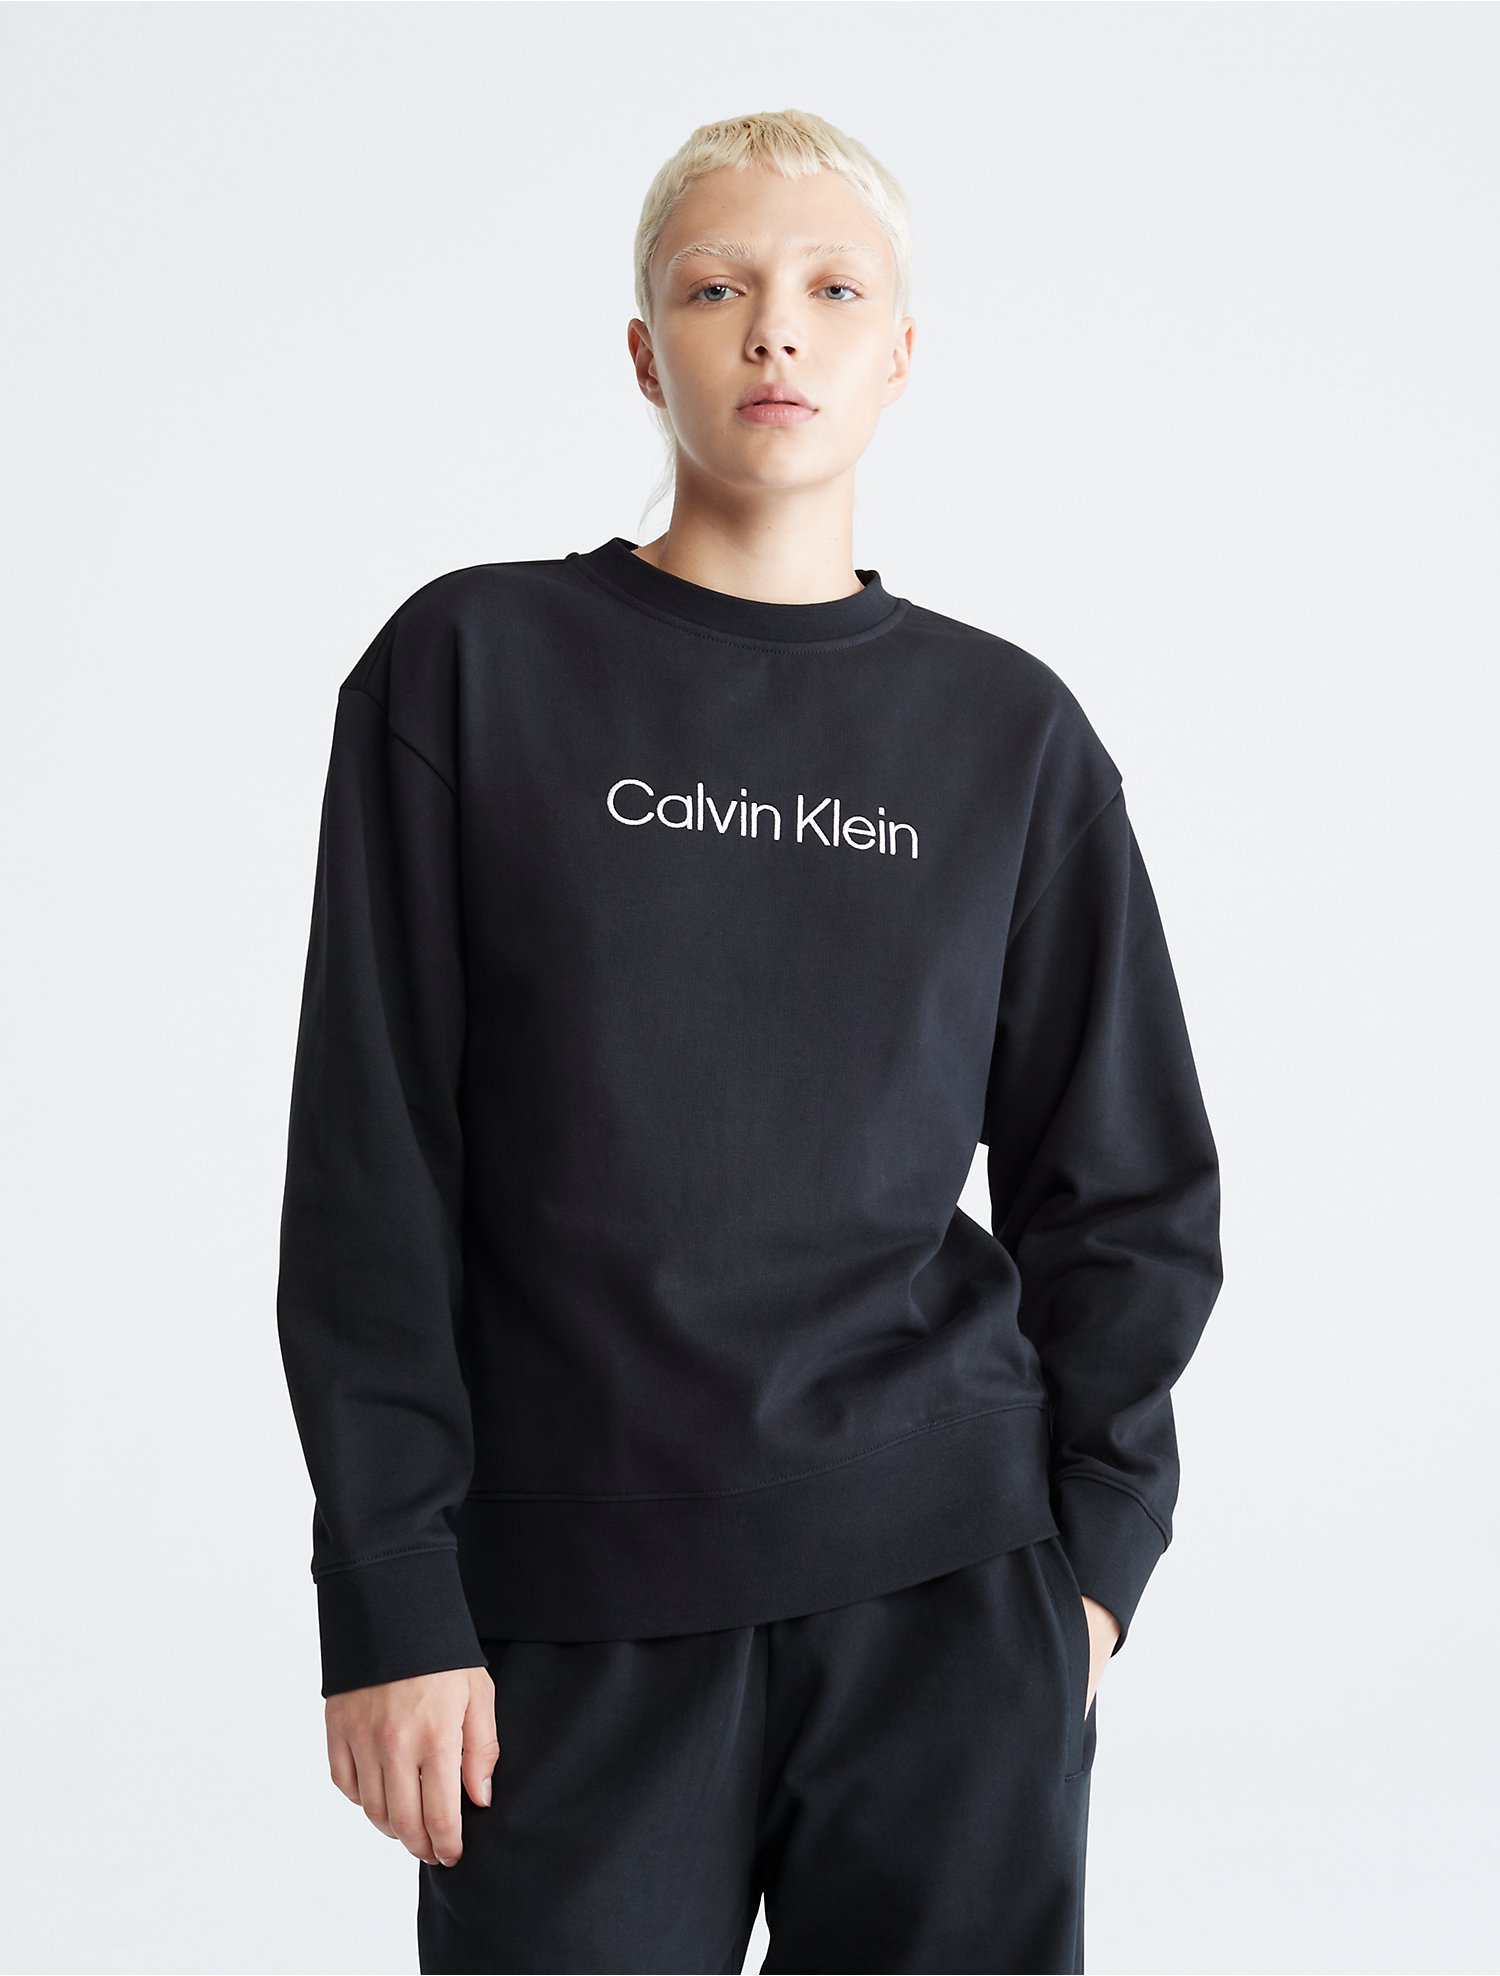 Om te mediteren grond Verrassend genoeg Relaxed Fit Standard Logo Crewneck Sweatshirt | Calvin Klein® USA